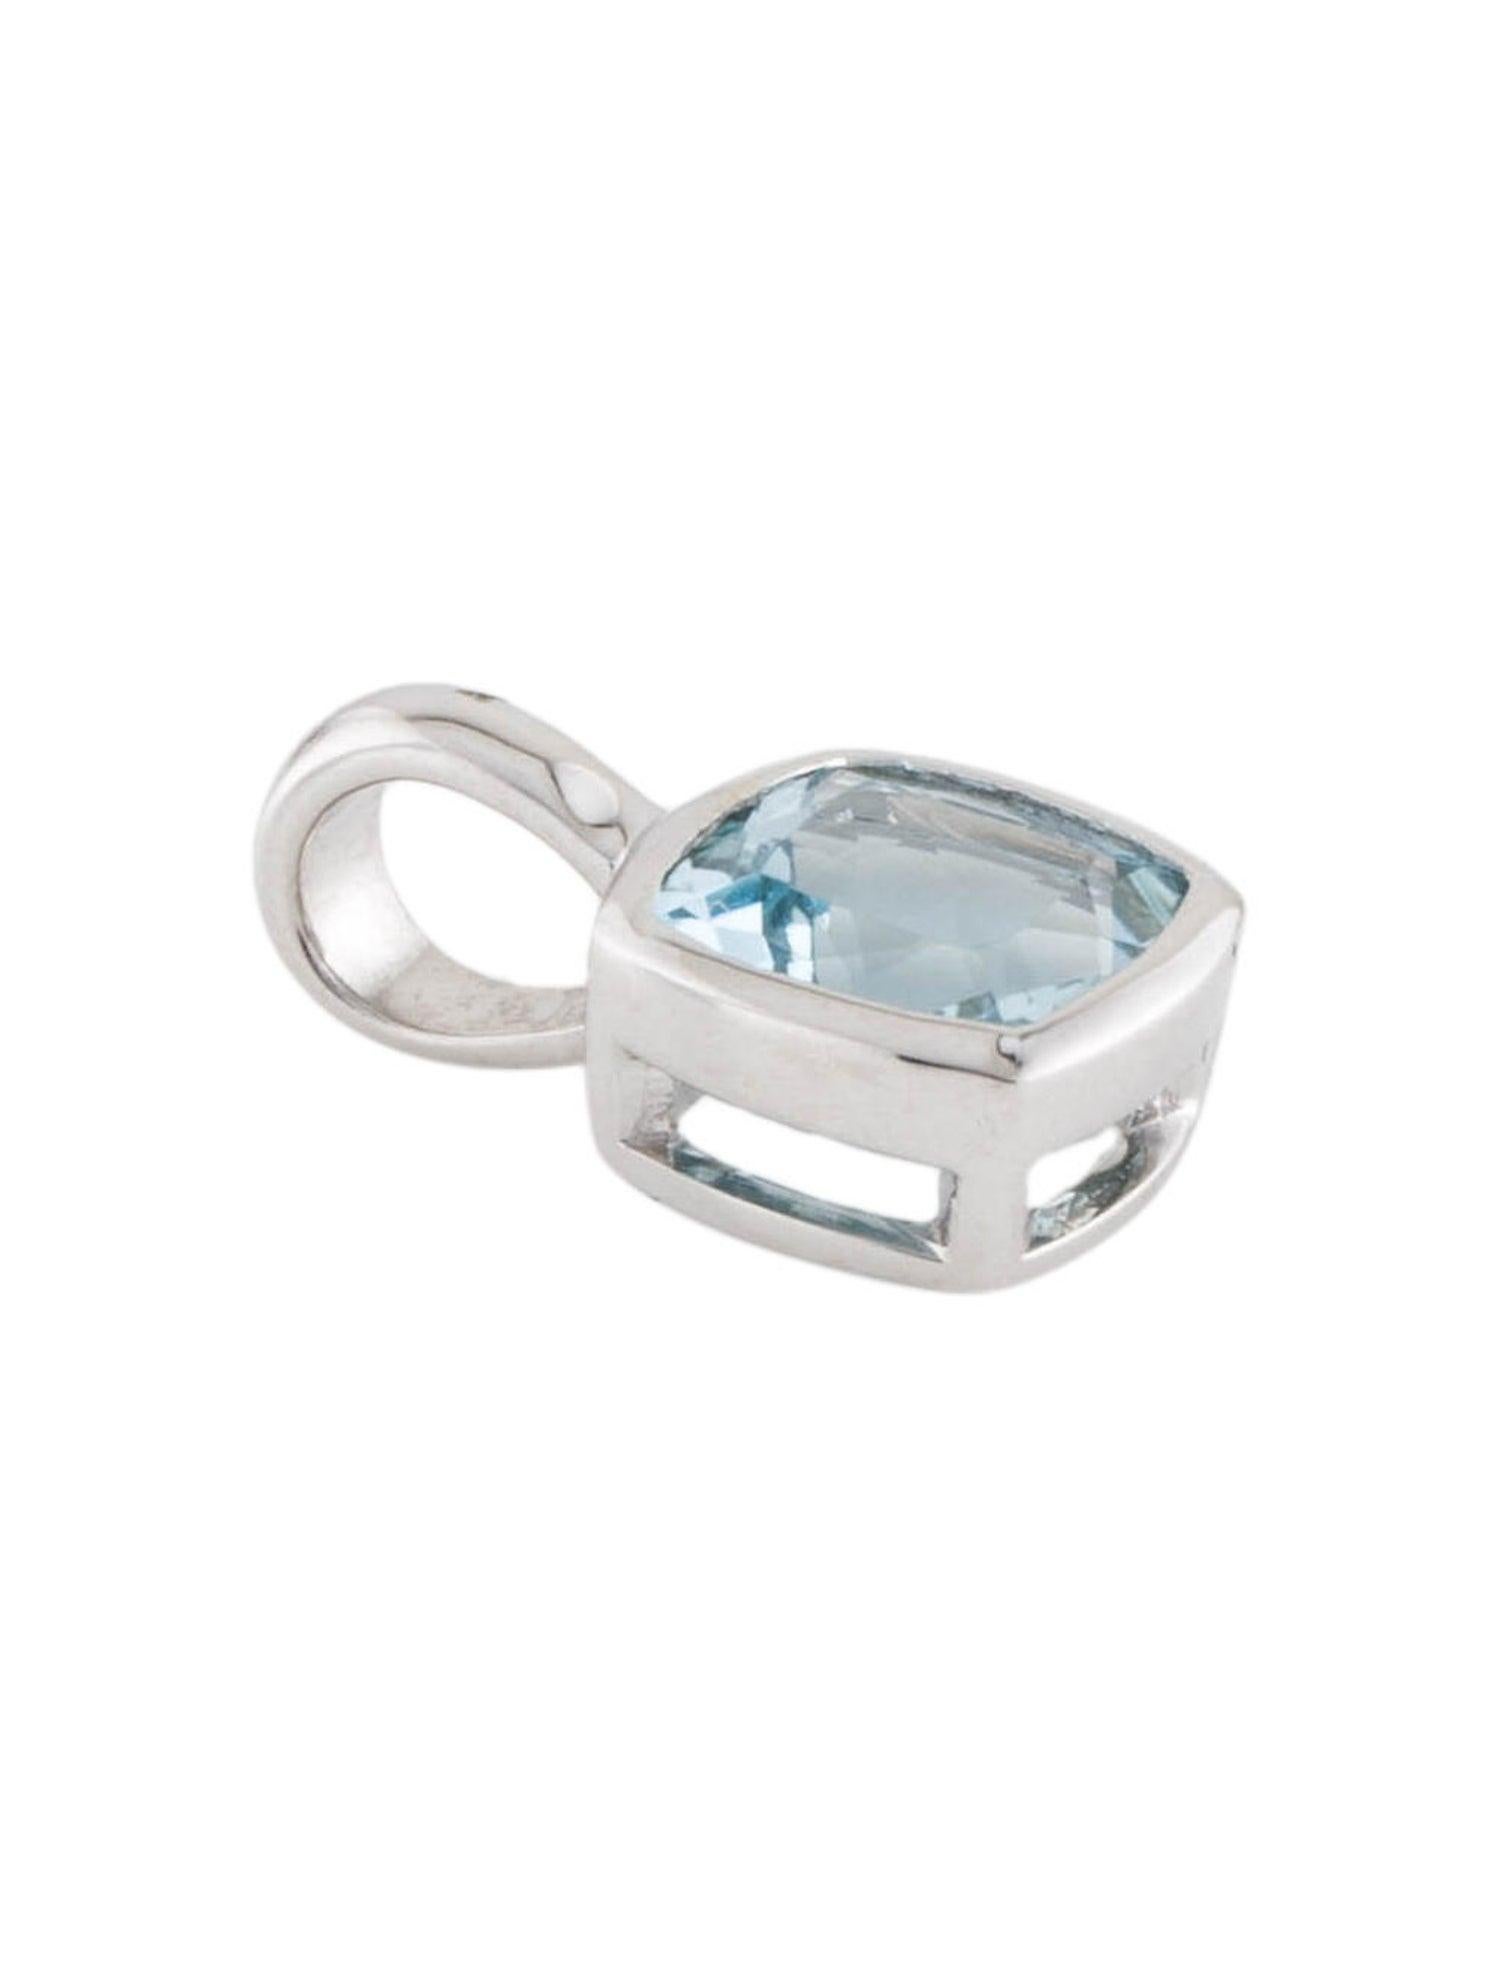 Brilliant Cut 14K 1.53ct Aquamarine Pendant - Elegant & Timeless Gemstone Statement Jewelry For Sale